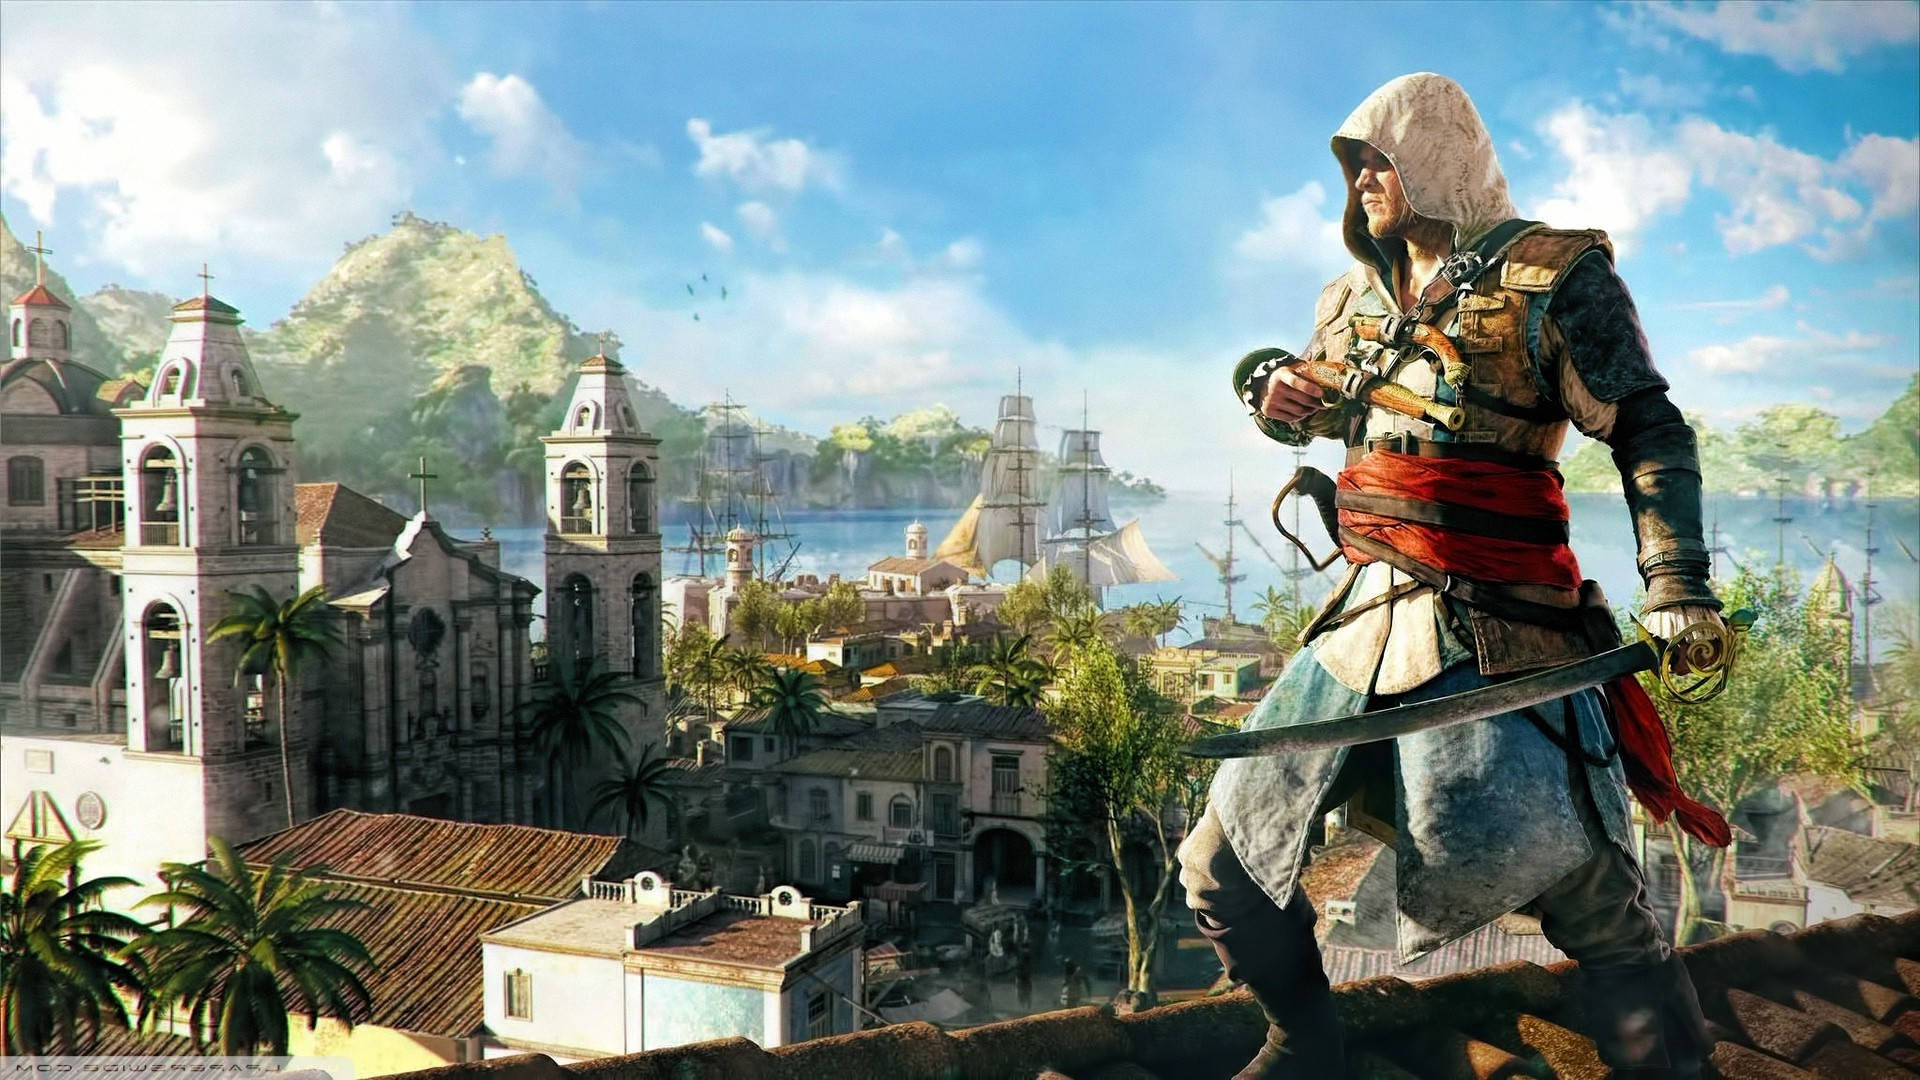 Download Assassin's Creed Black Flag Protagonist View Wallpaper | Wallpapers .com